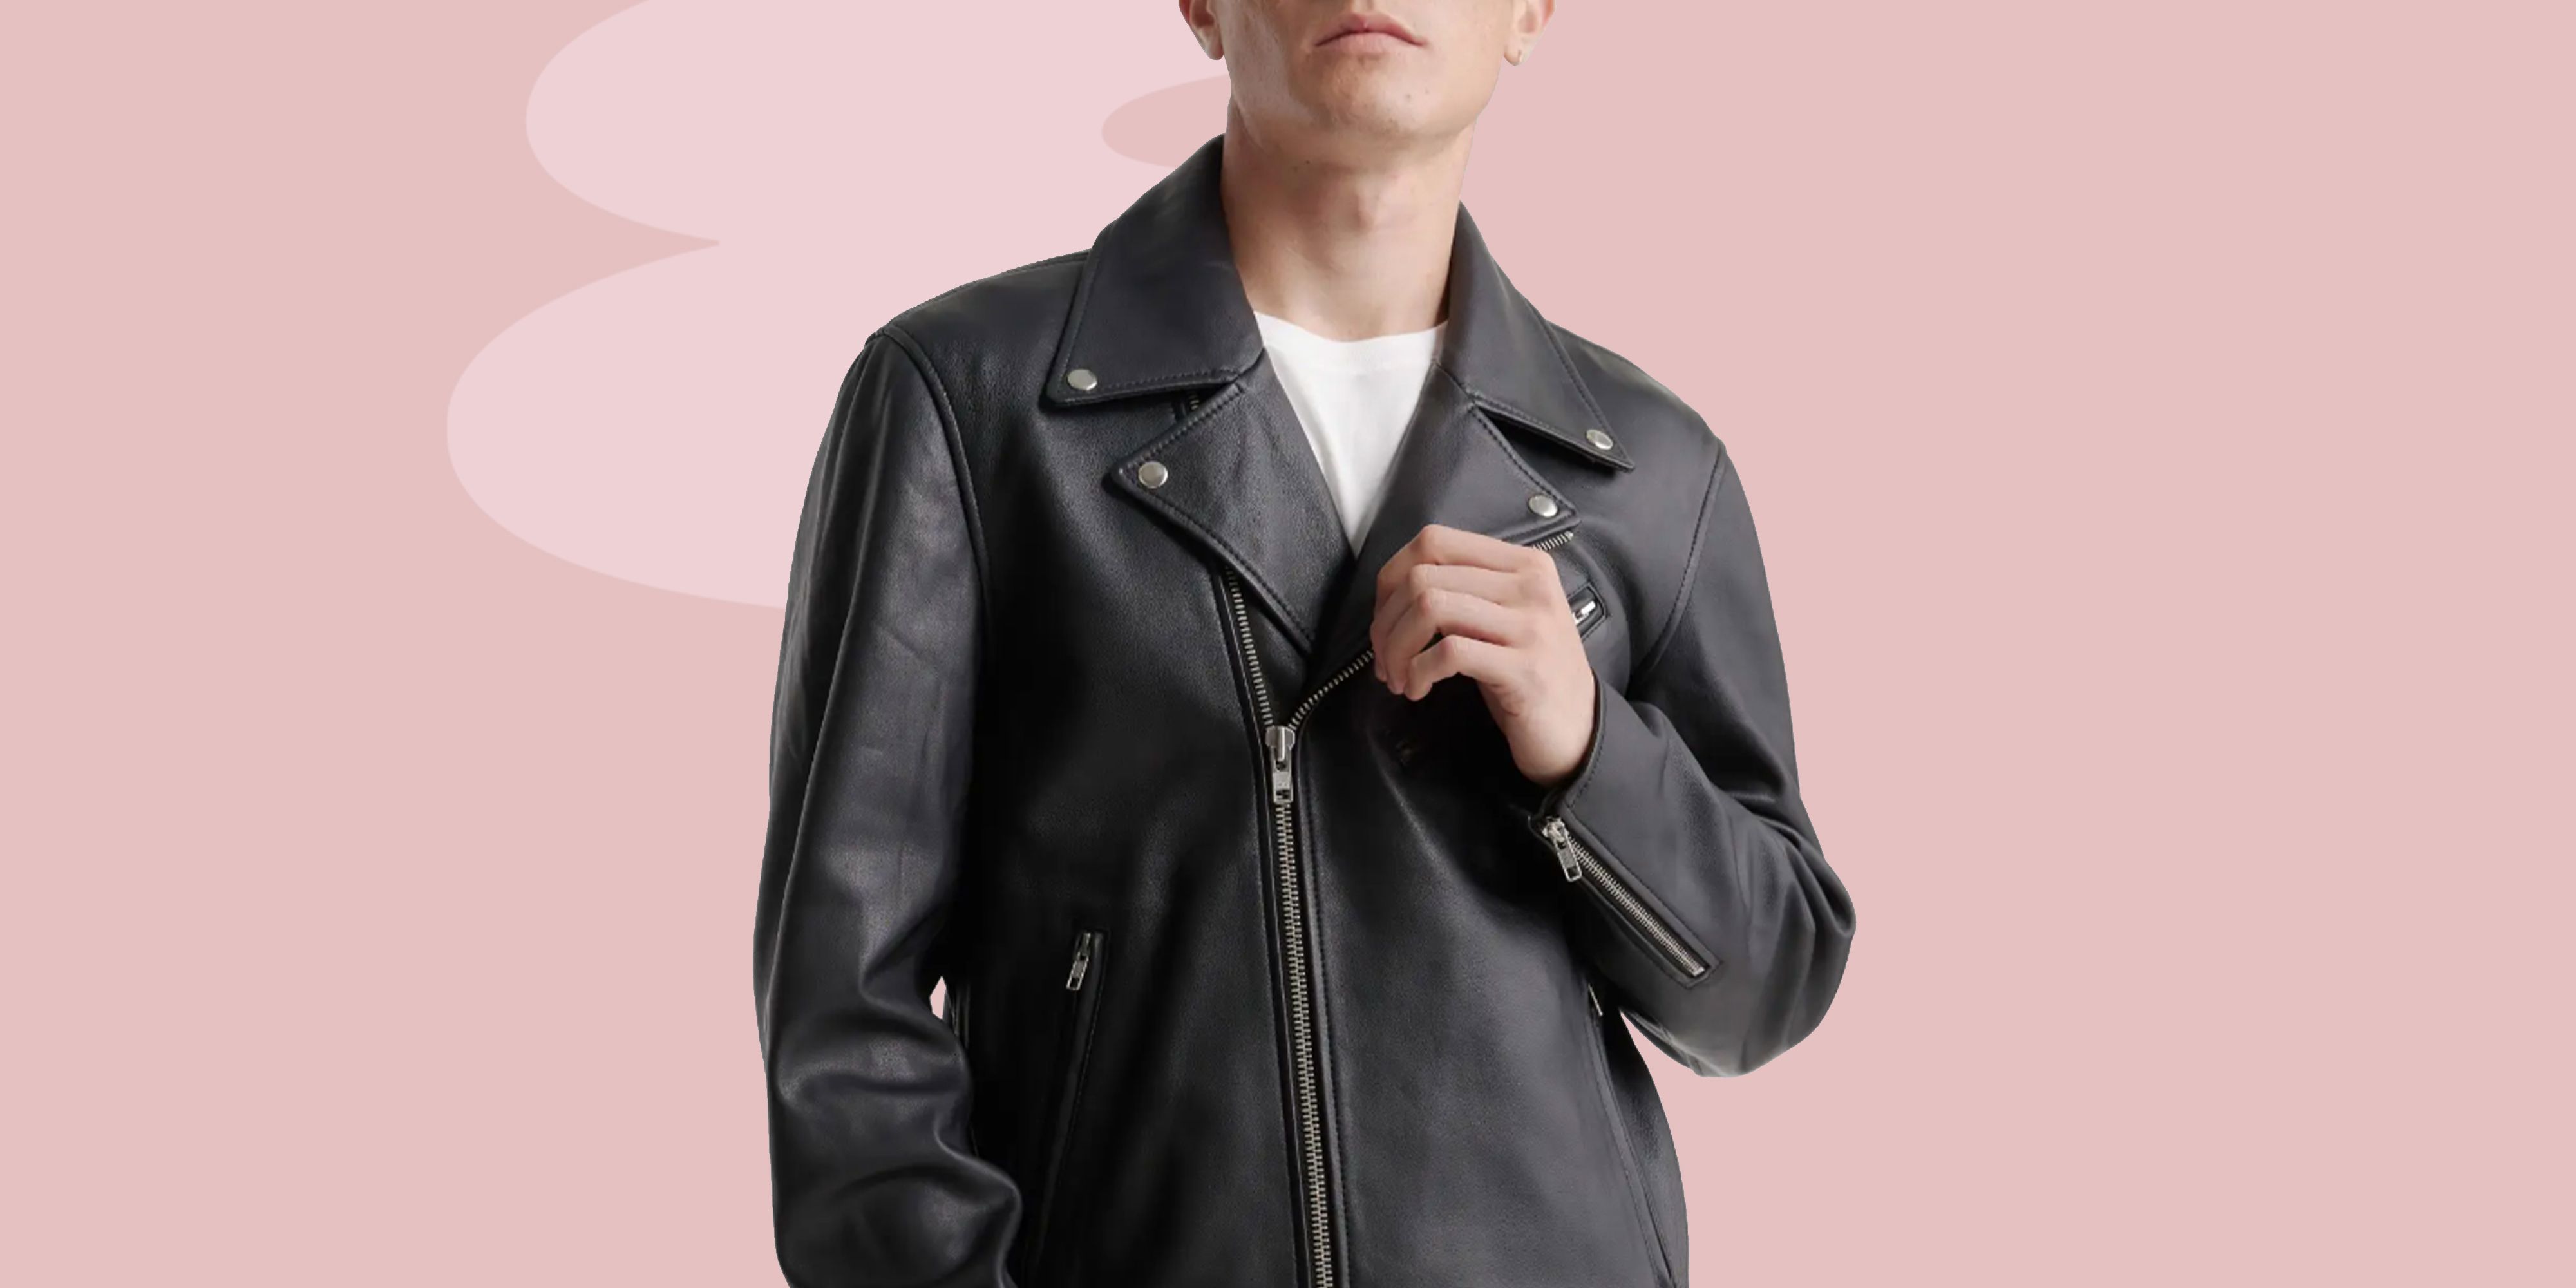 100% nappa leather jacket - Man